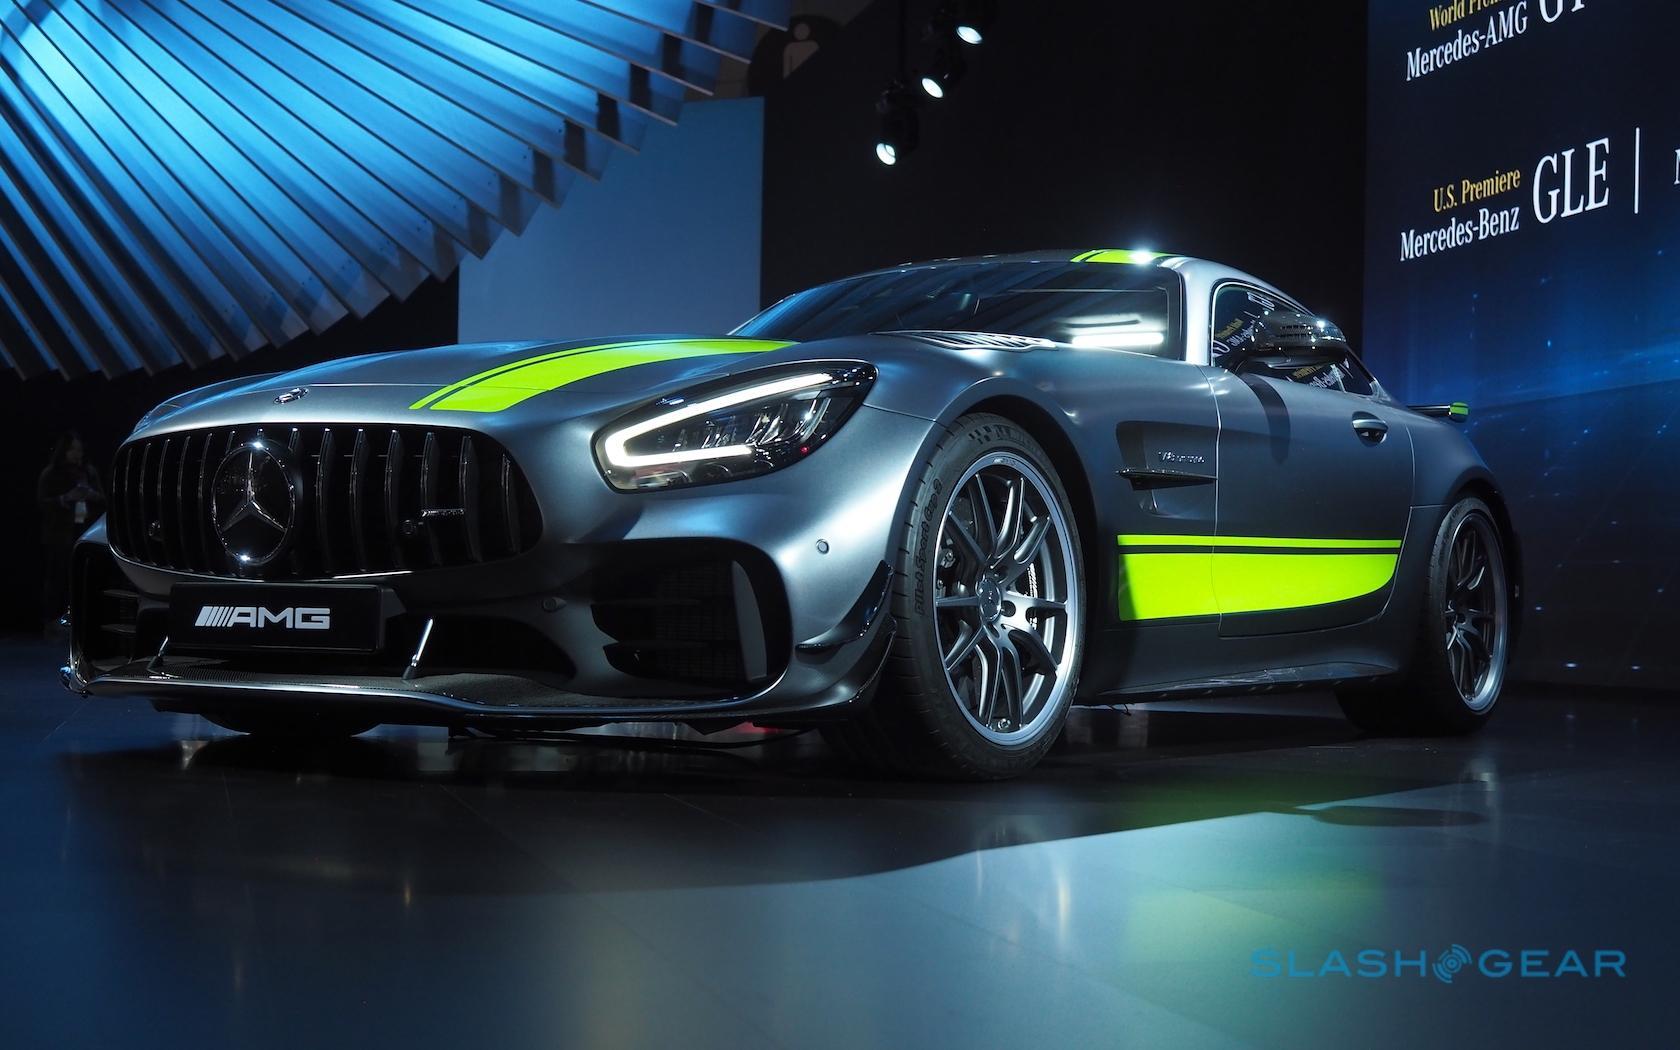 The 2020 Mercedes AMG GT R PRO Speeds Smarter With Lavish New Aero